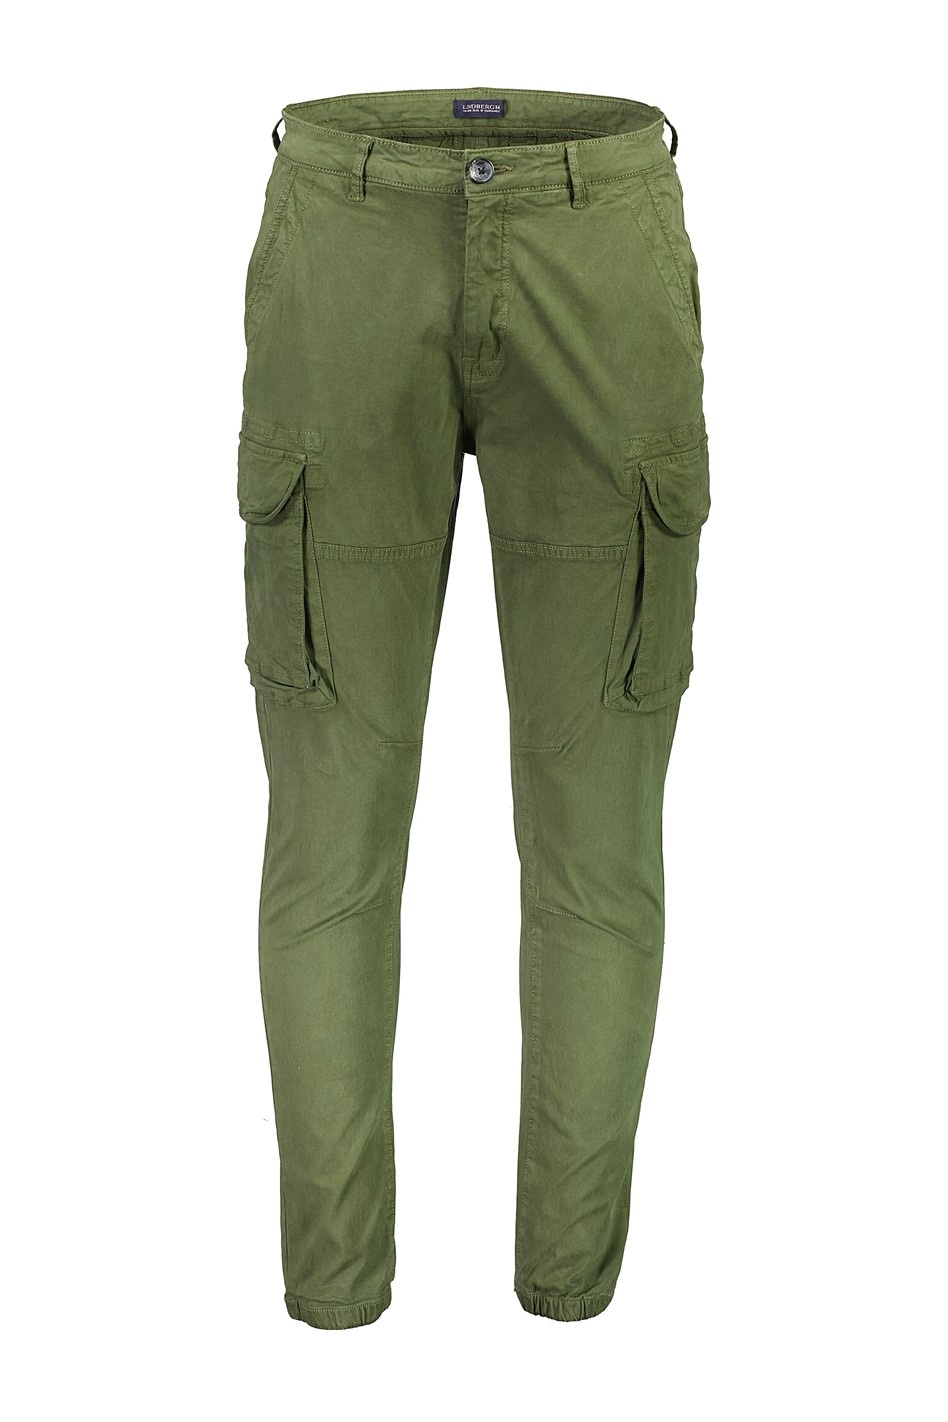 Cargo Pants For Men - Buy Latest Trendy Cargo Pants Online | Lindbergh